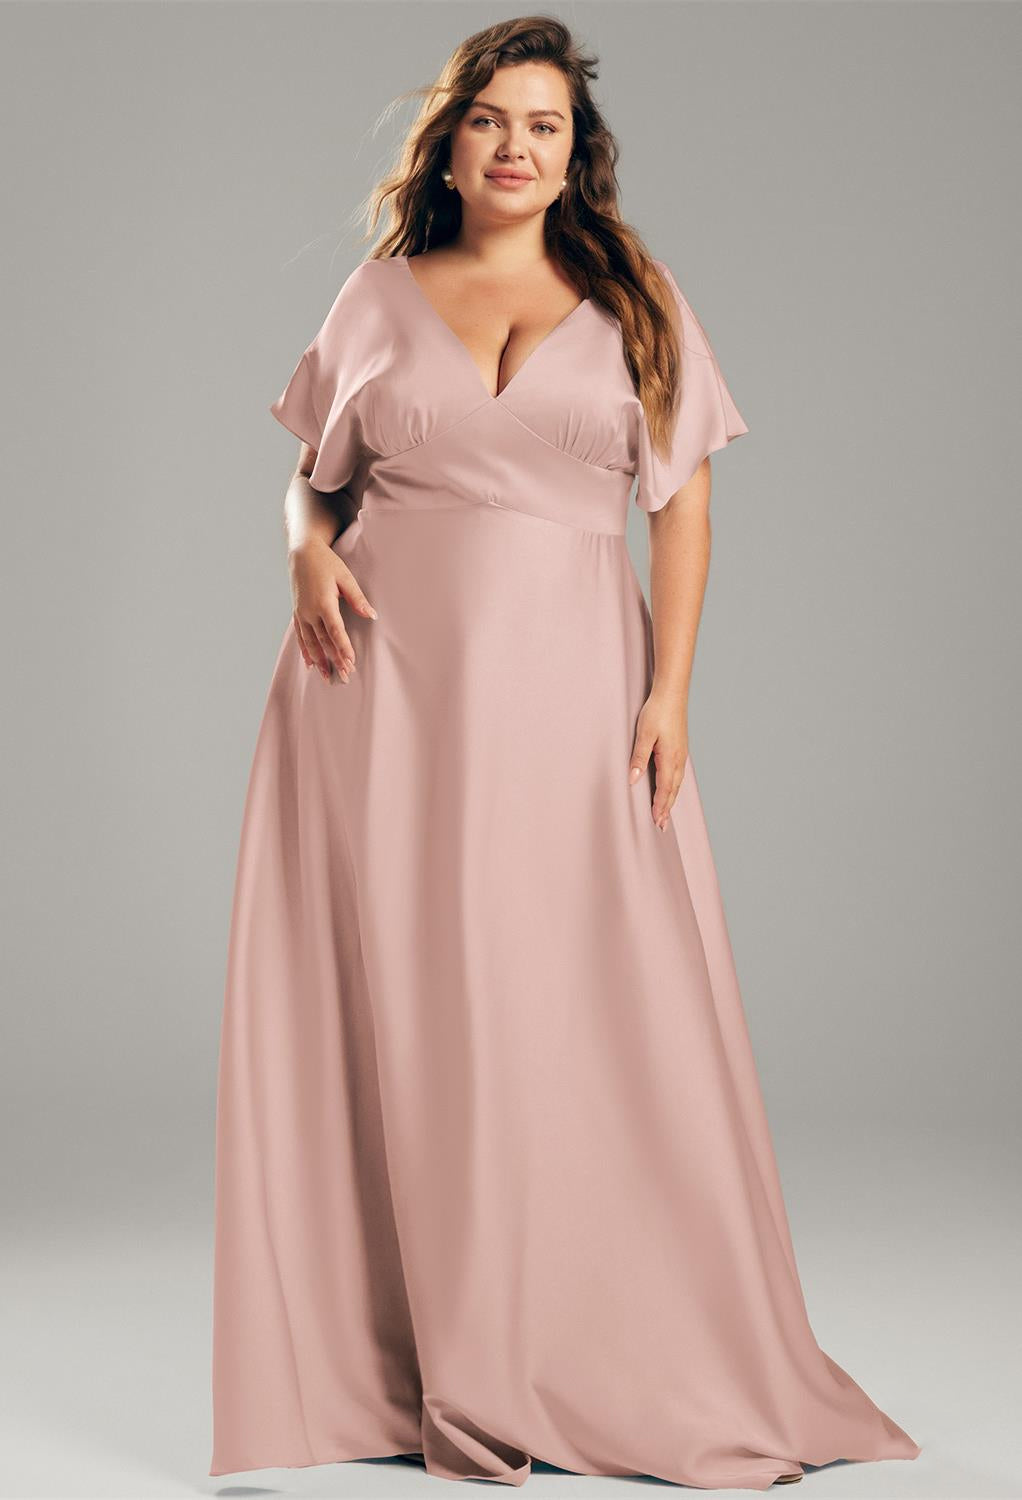 A Nora - Satin Charmeuse Bridesmaid Dress - Off The Rack in blush available at a Bergamot Bridal bridal shop in London.